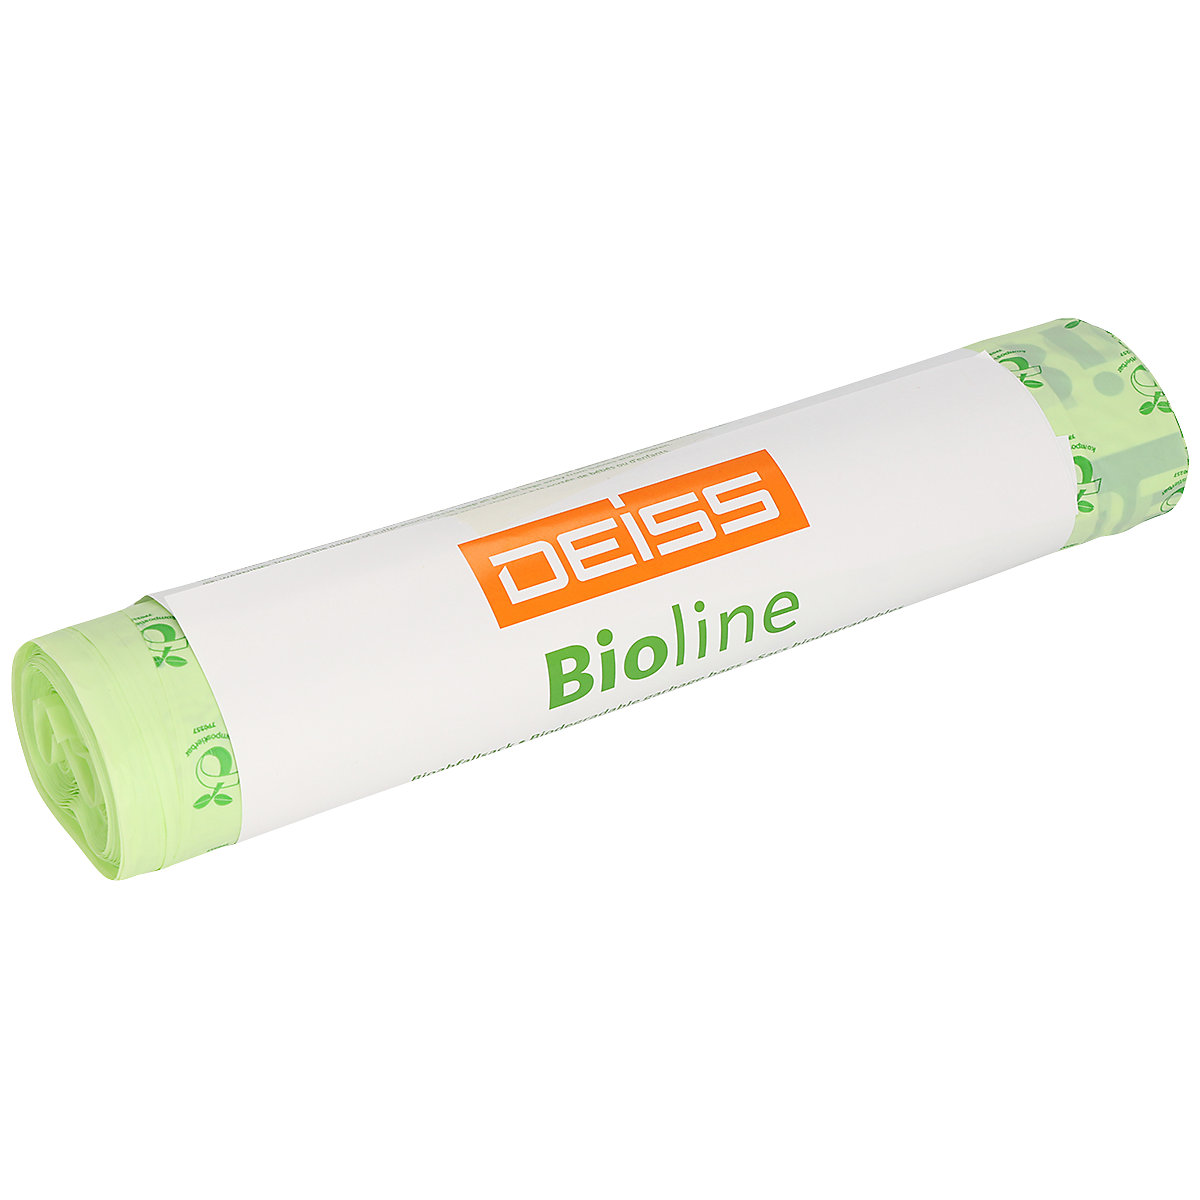 Sacs-poubelle Bioline ecovio® - Deiss